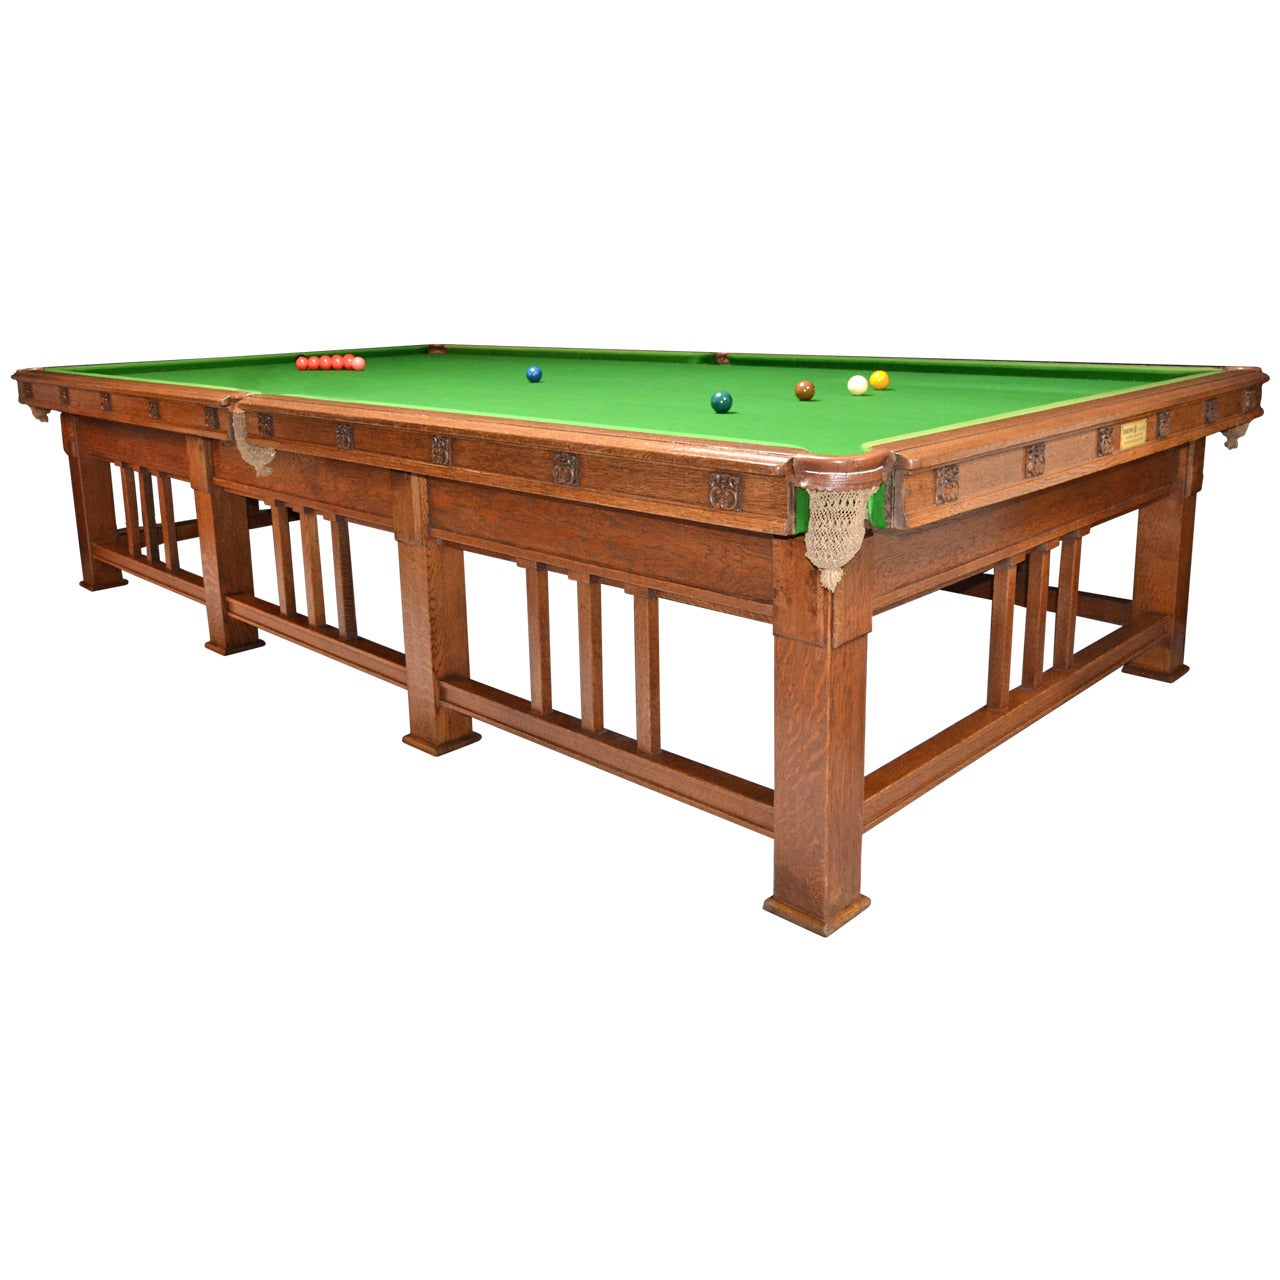 Arts & Crafts Billiard or Snooker Table Designed by Frank Brangwyn